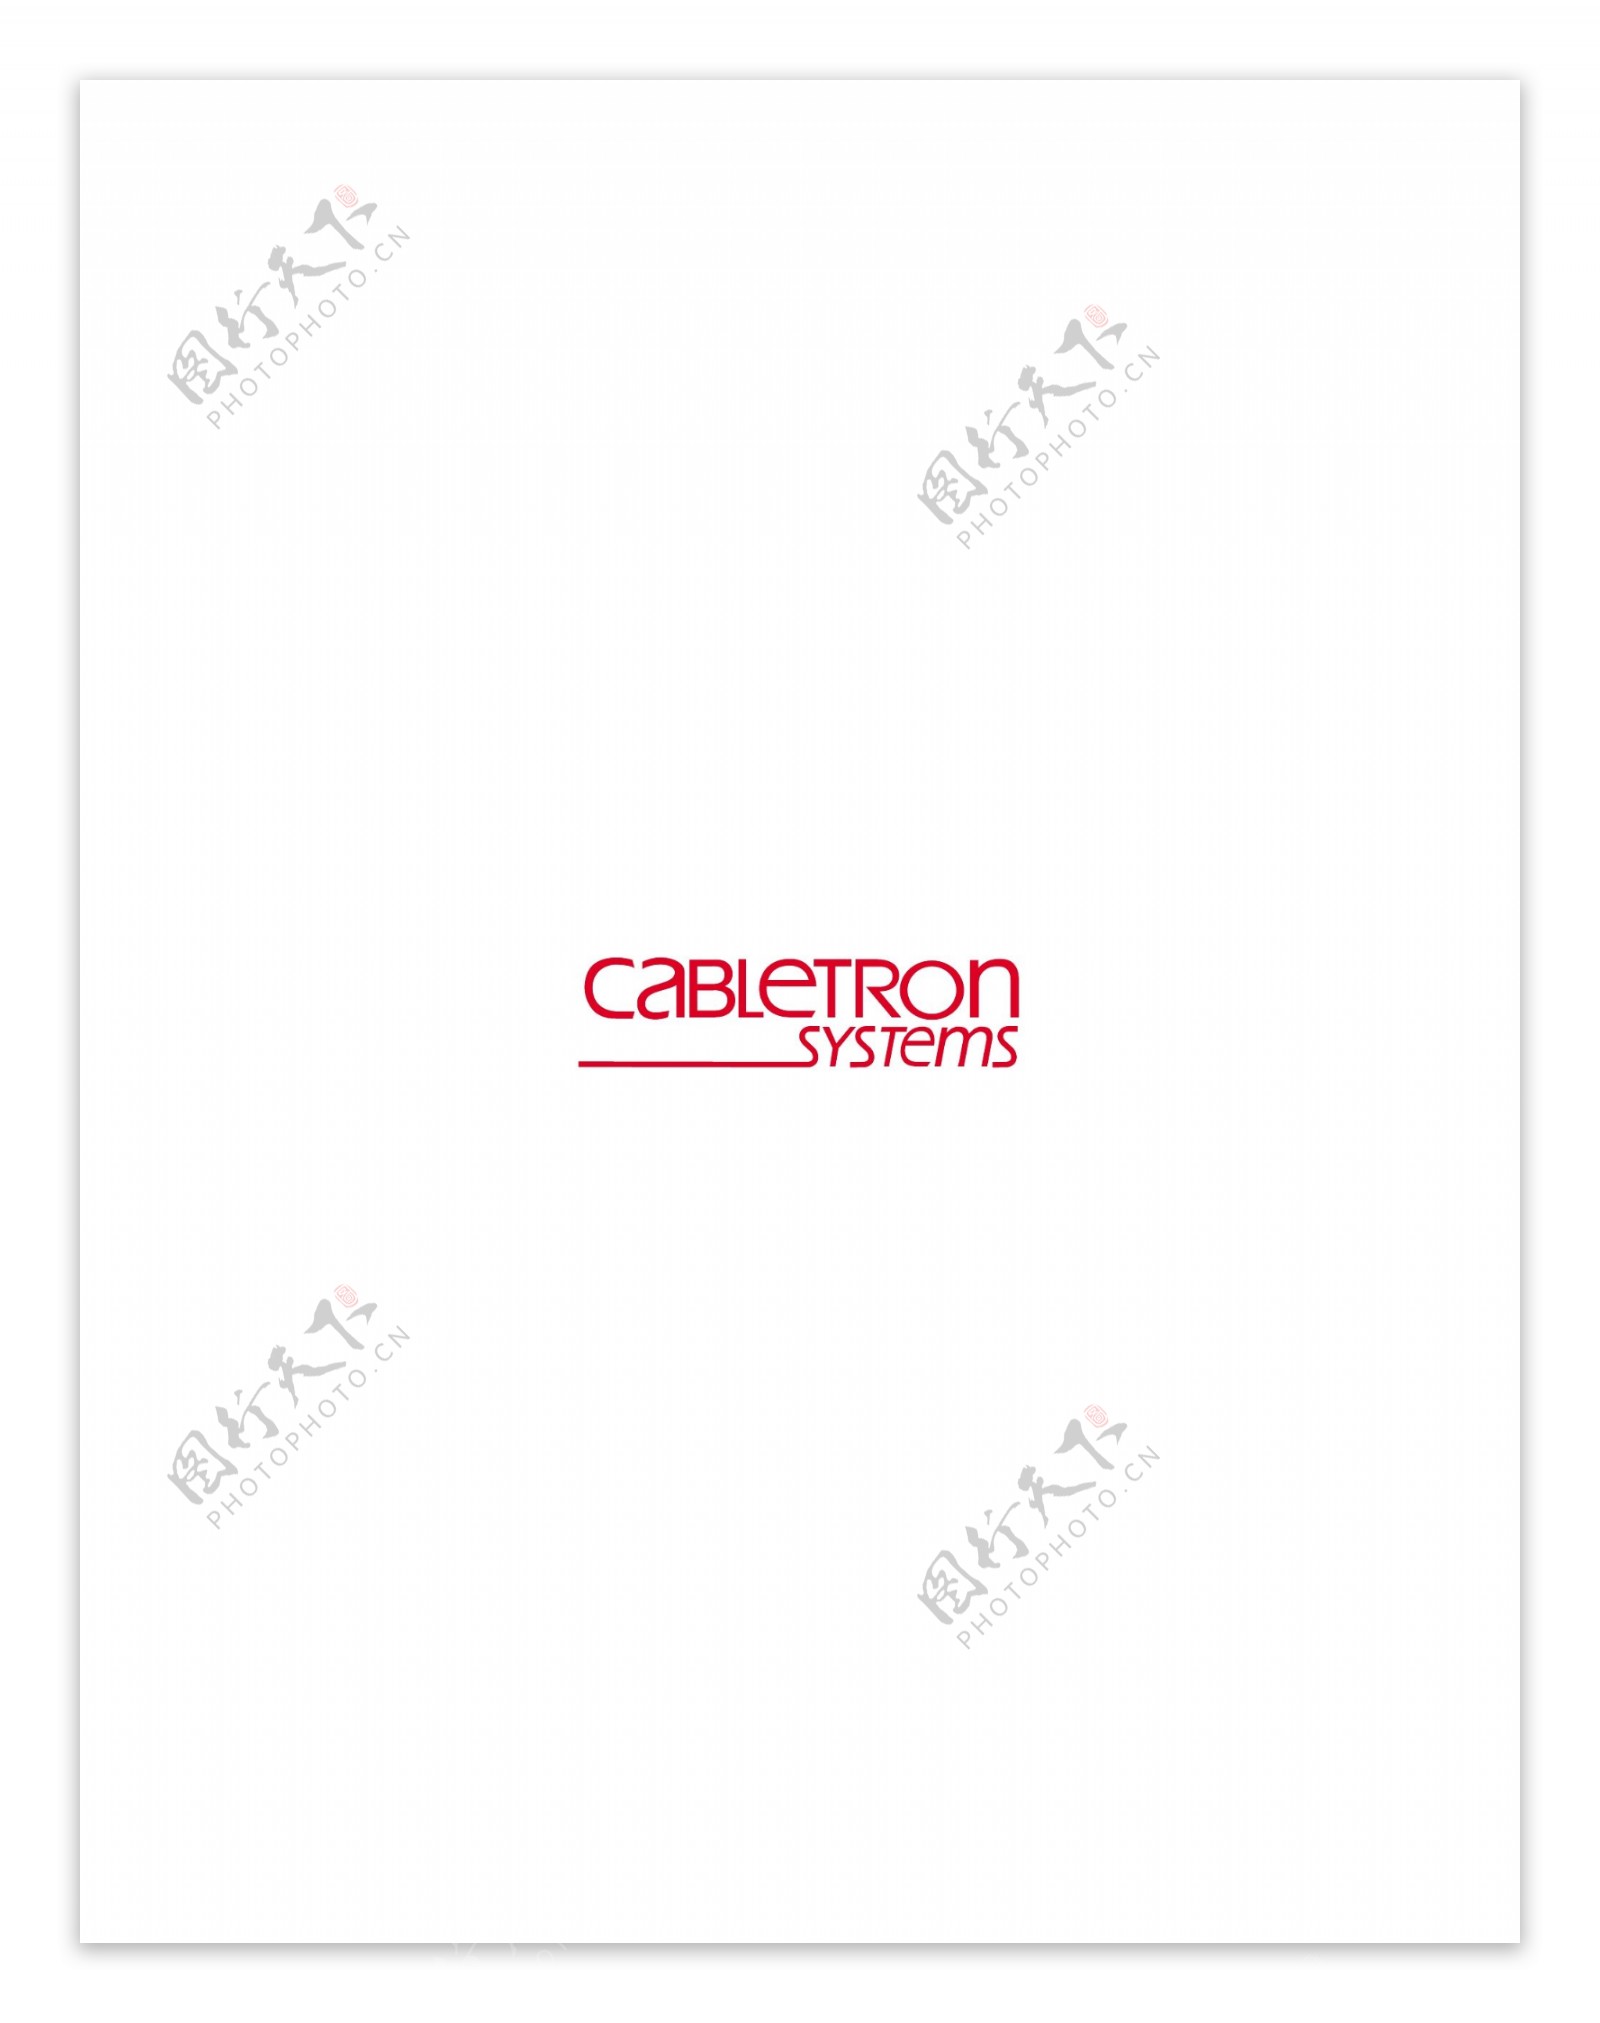 Cabletronlogo设计欣赏足球和娱乐相关标志Cabletron下载标志设计欣赏